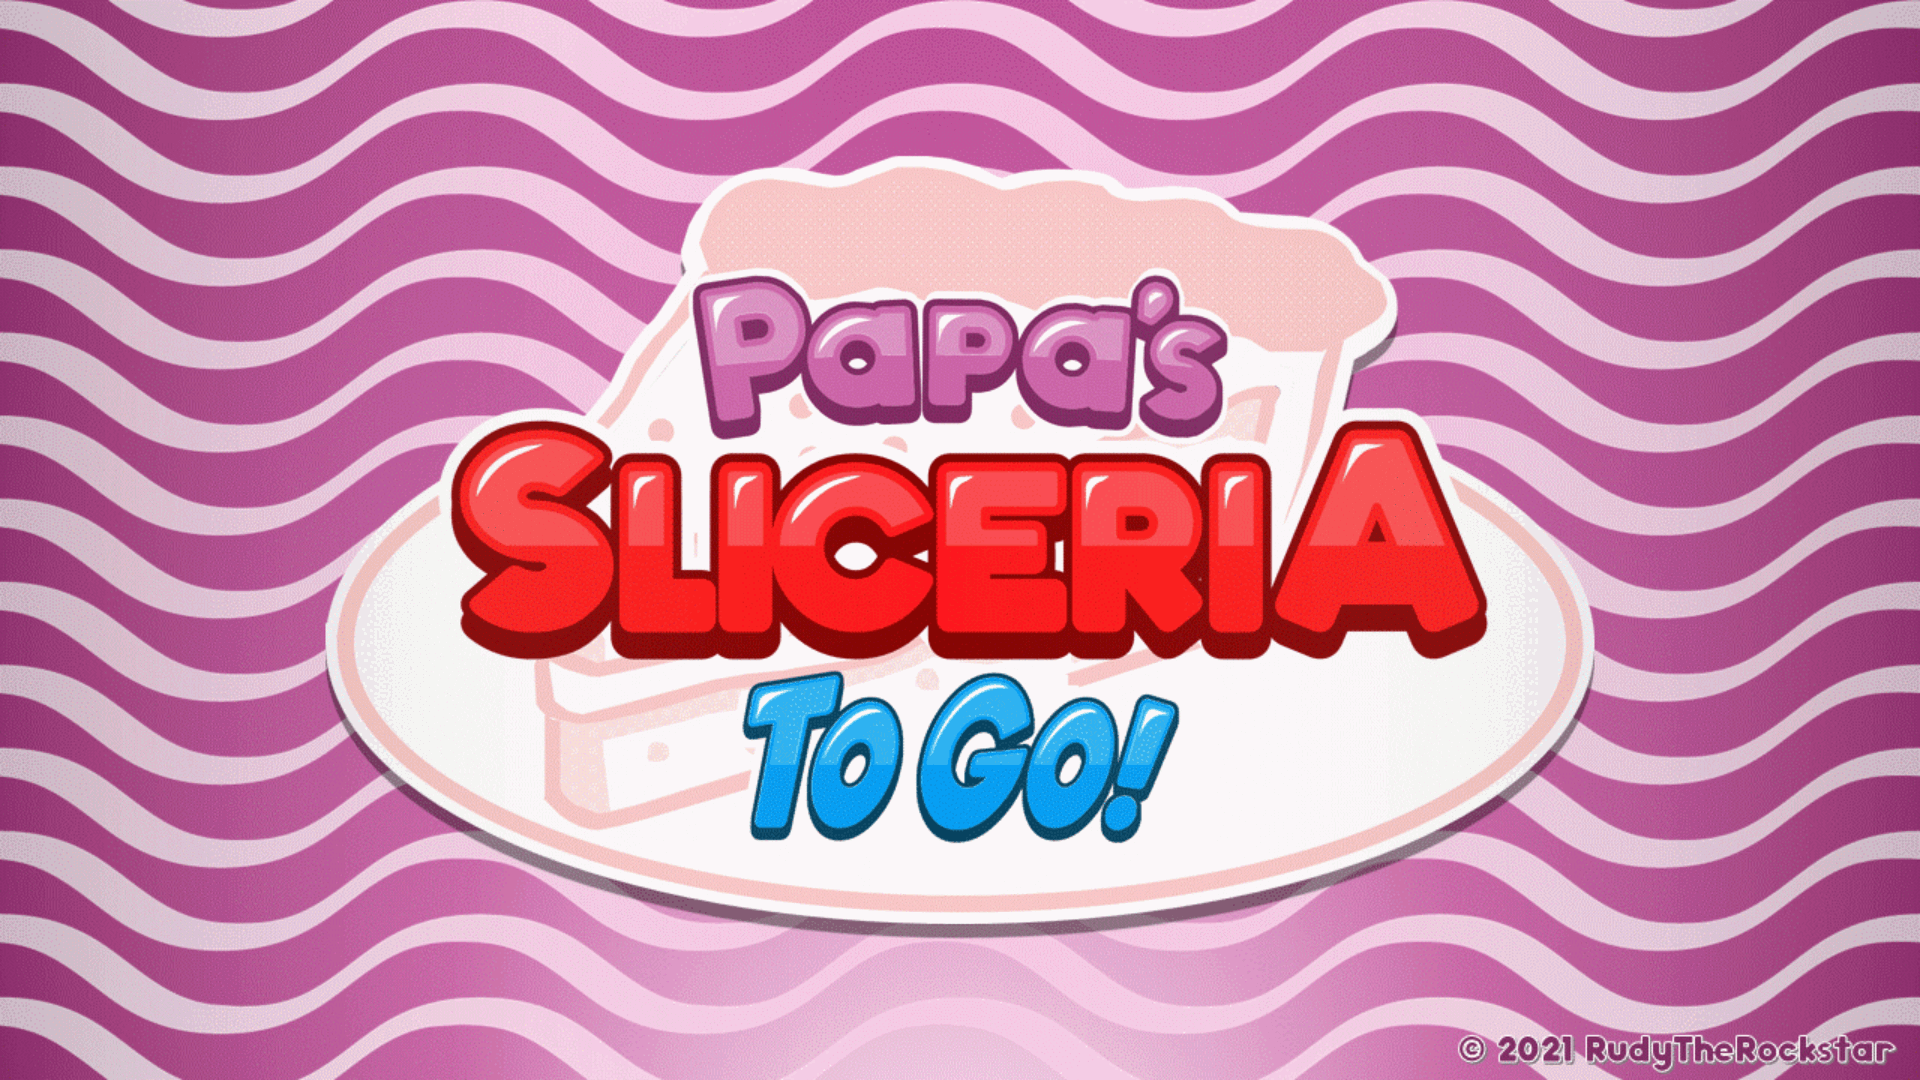 Coming Soon… Papa's Paleteria To Go! « Paleteria « Flipline Studios Blog